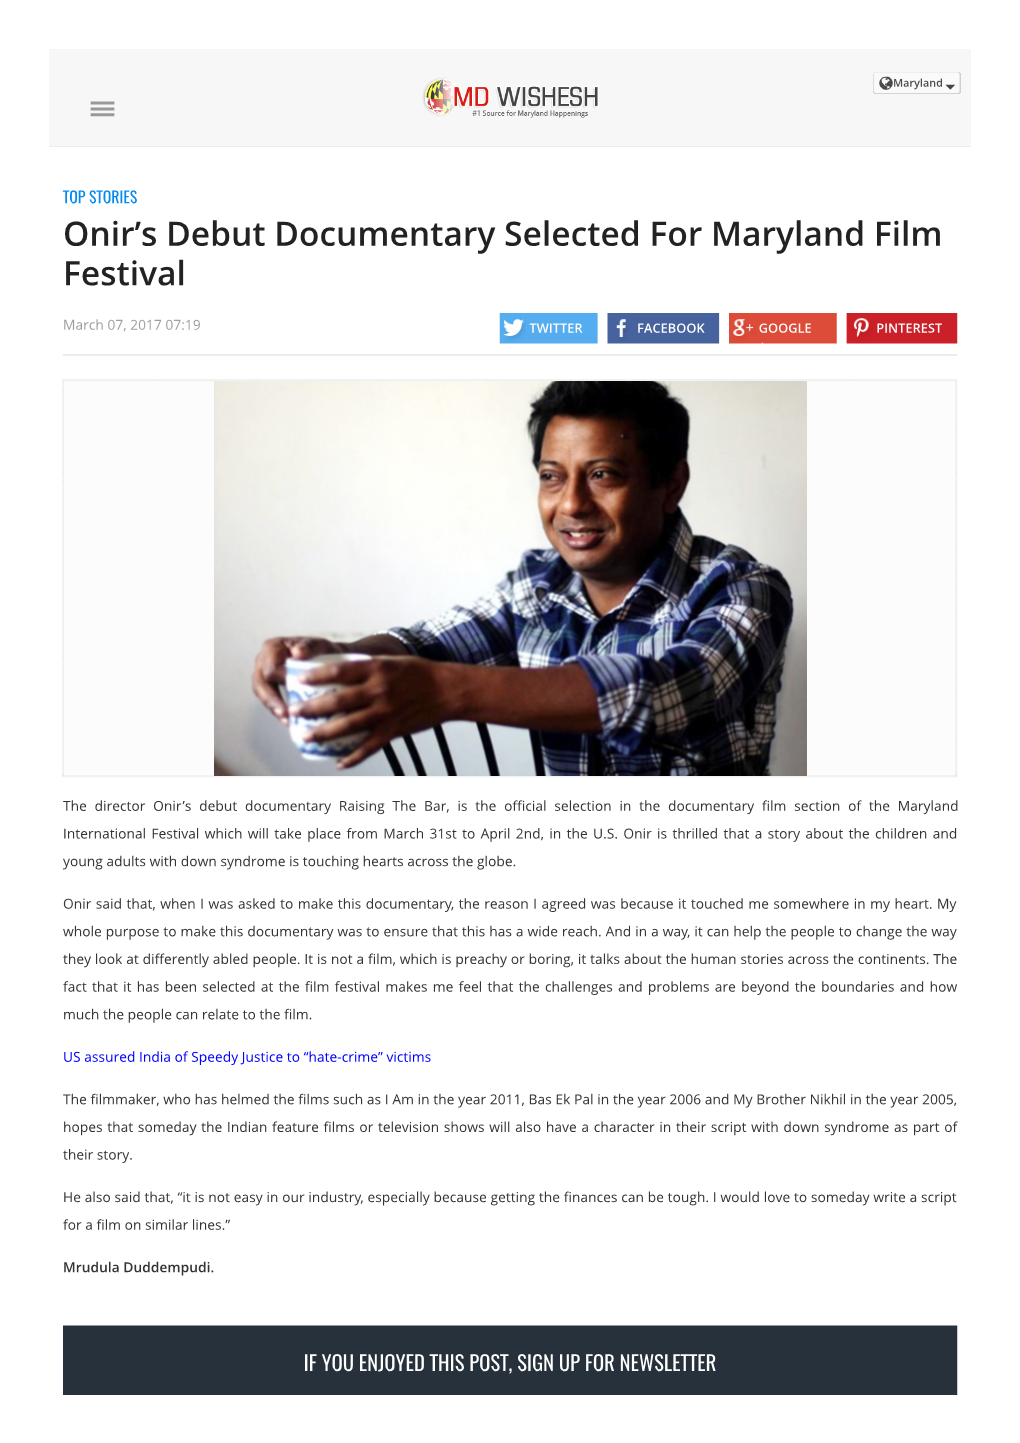 Onir's Debut Documentary Selected for Maryland Film Festival